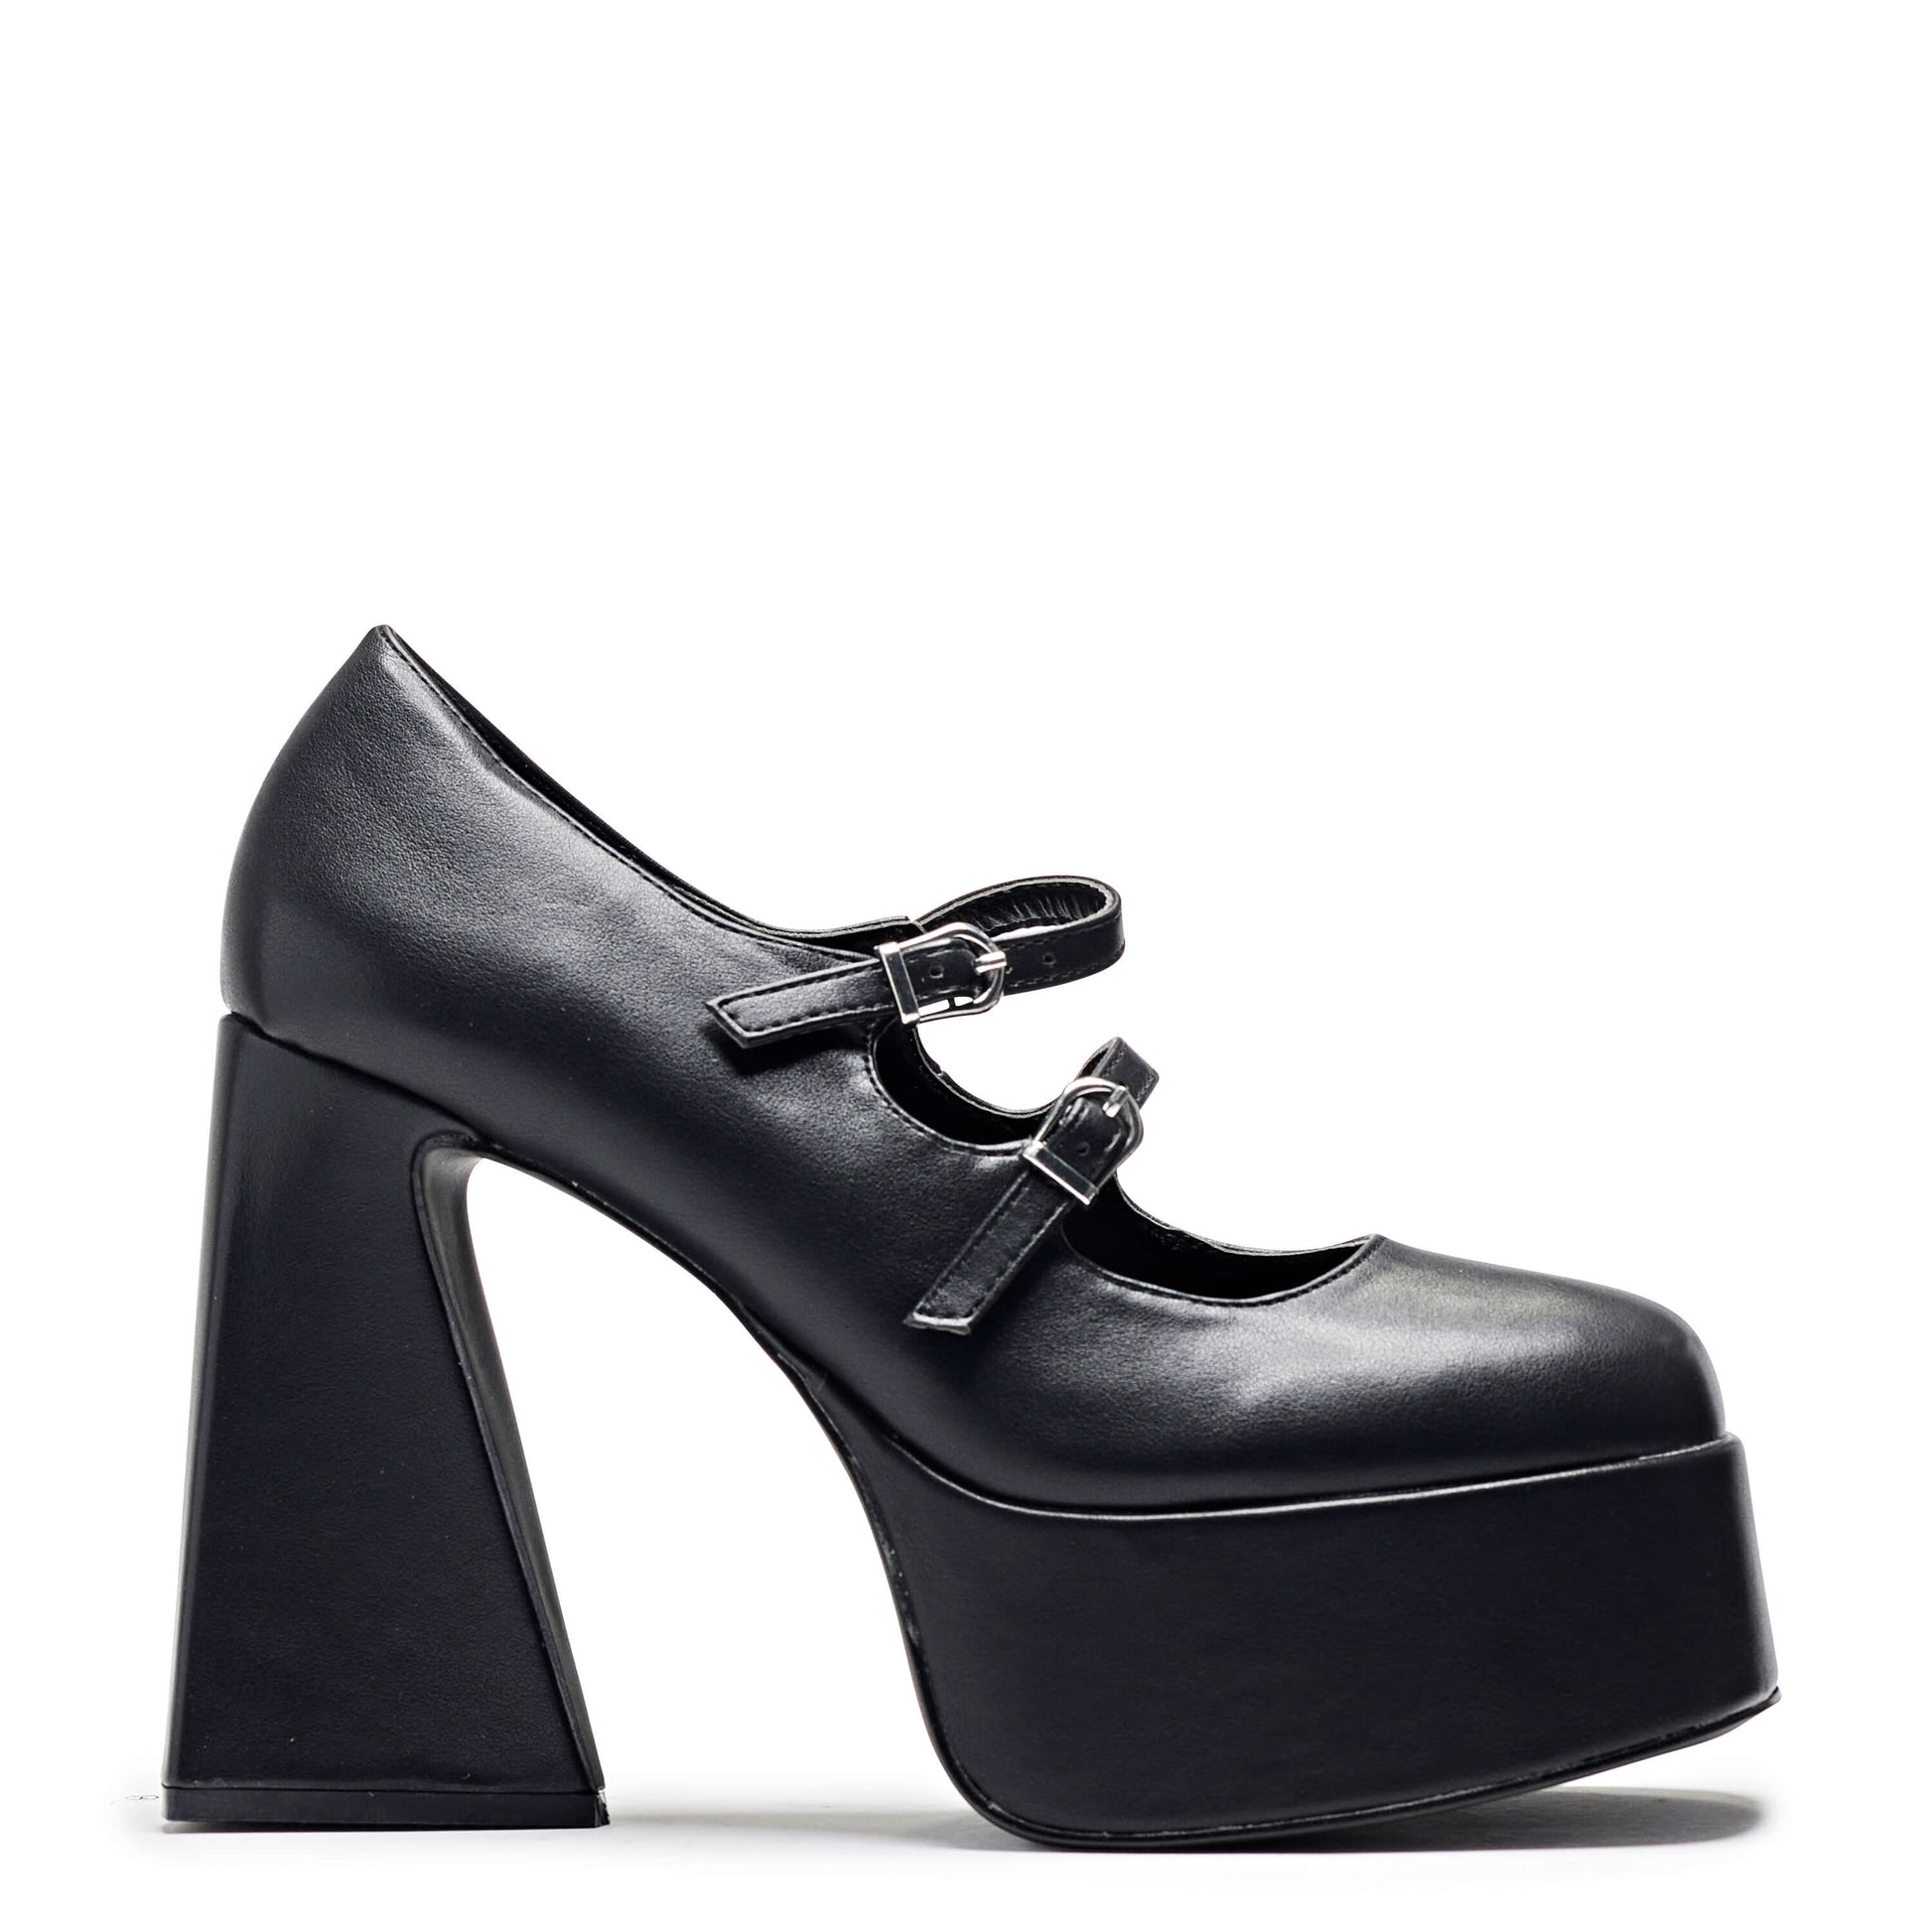 Zeba Black Platform Heels - Shoes - KOI Footwear - Black - Side View